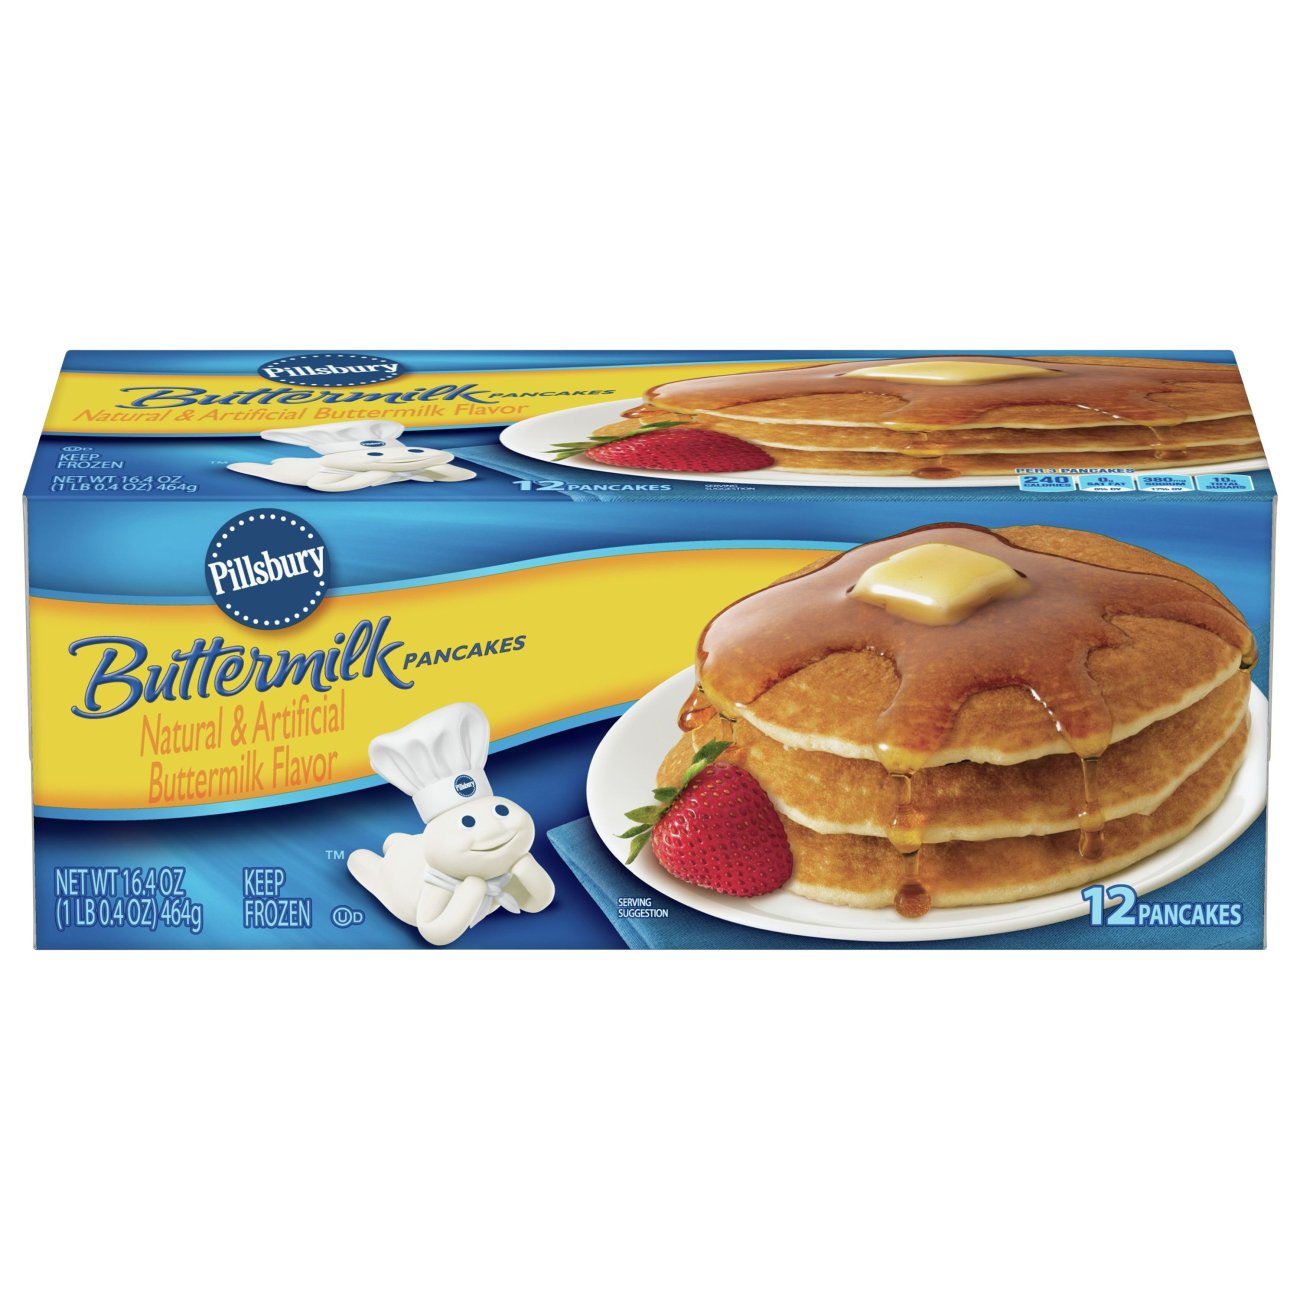 Pillsbury Buttermilk Pancakes - Shop Entrees & Sides at H-E-B